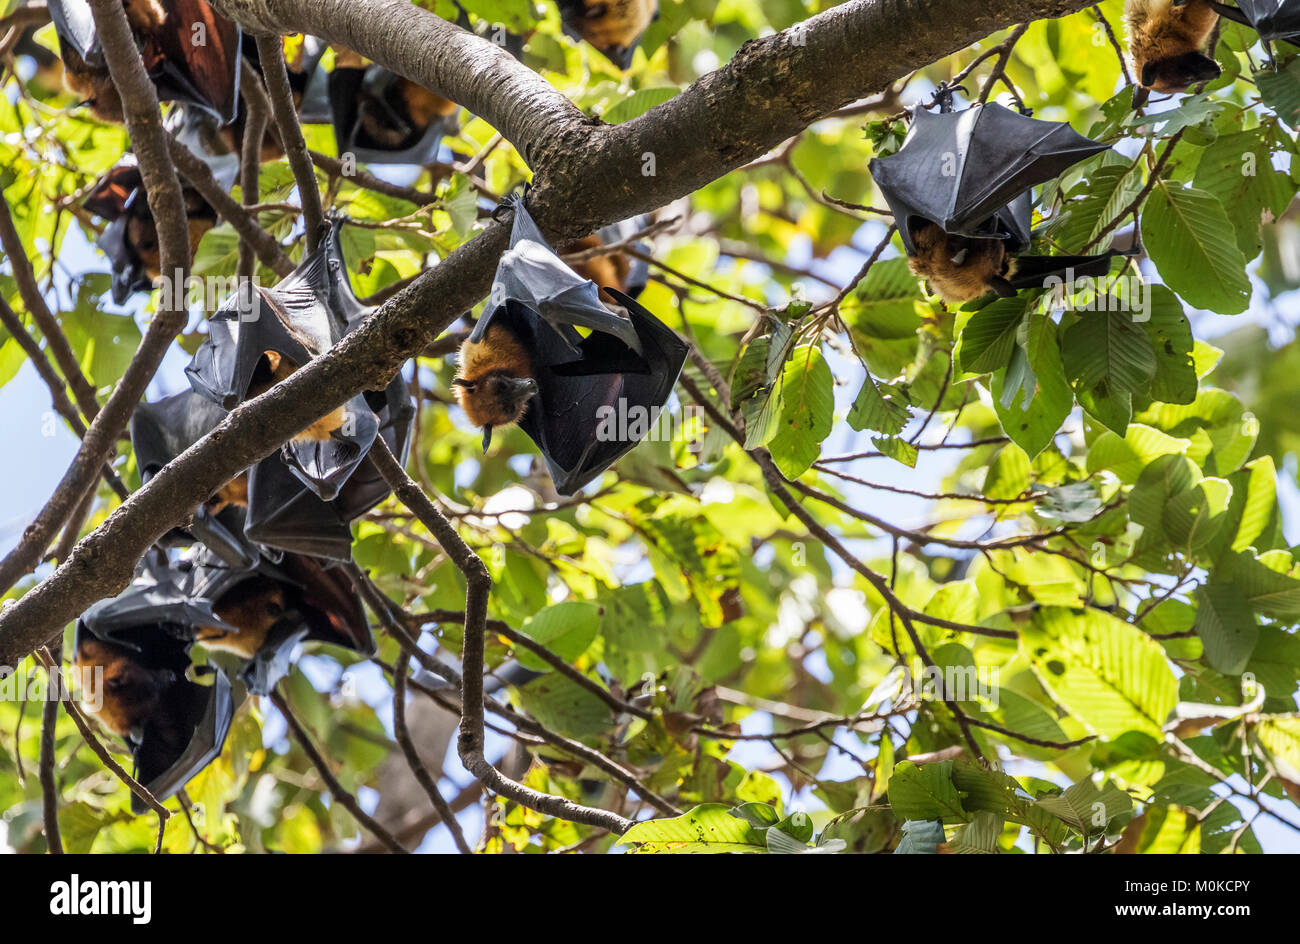 Fruit bats in trees; Siem Reap, Cambodia Stock Photo